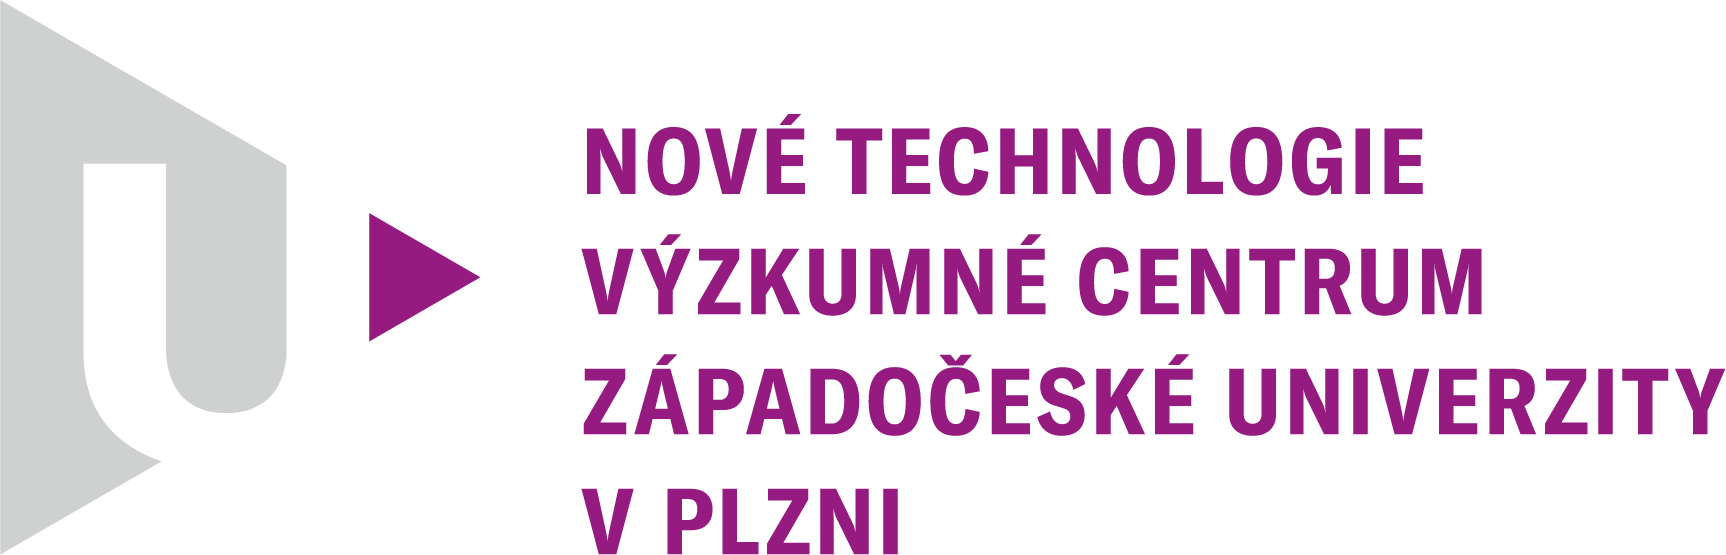 logo NTC